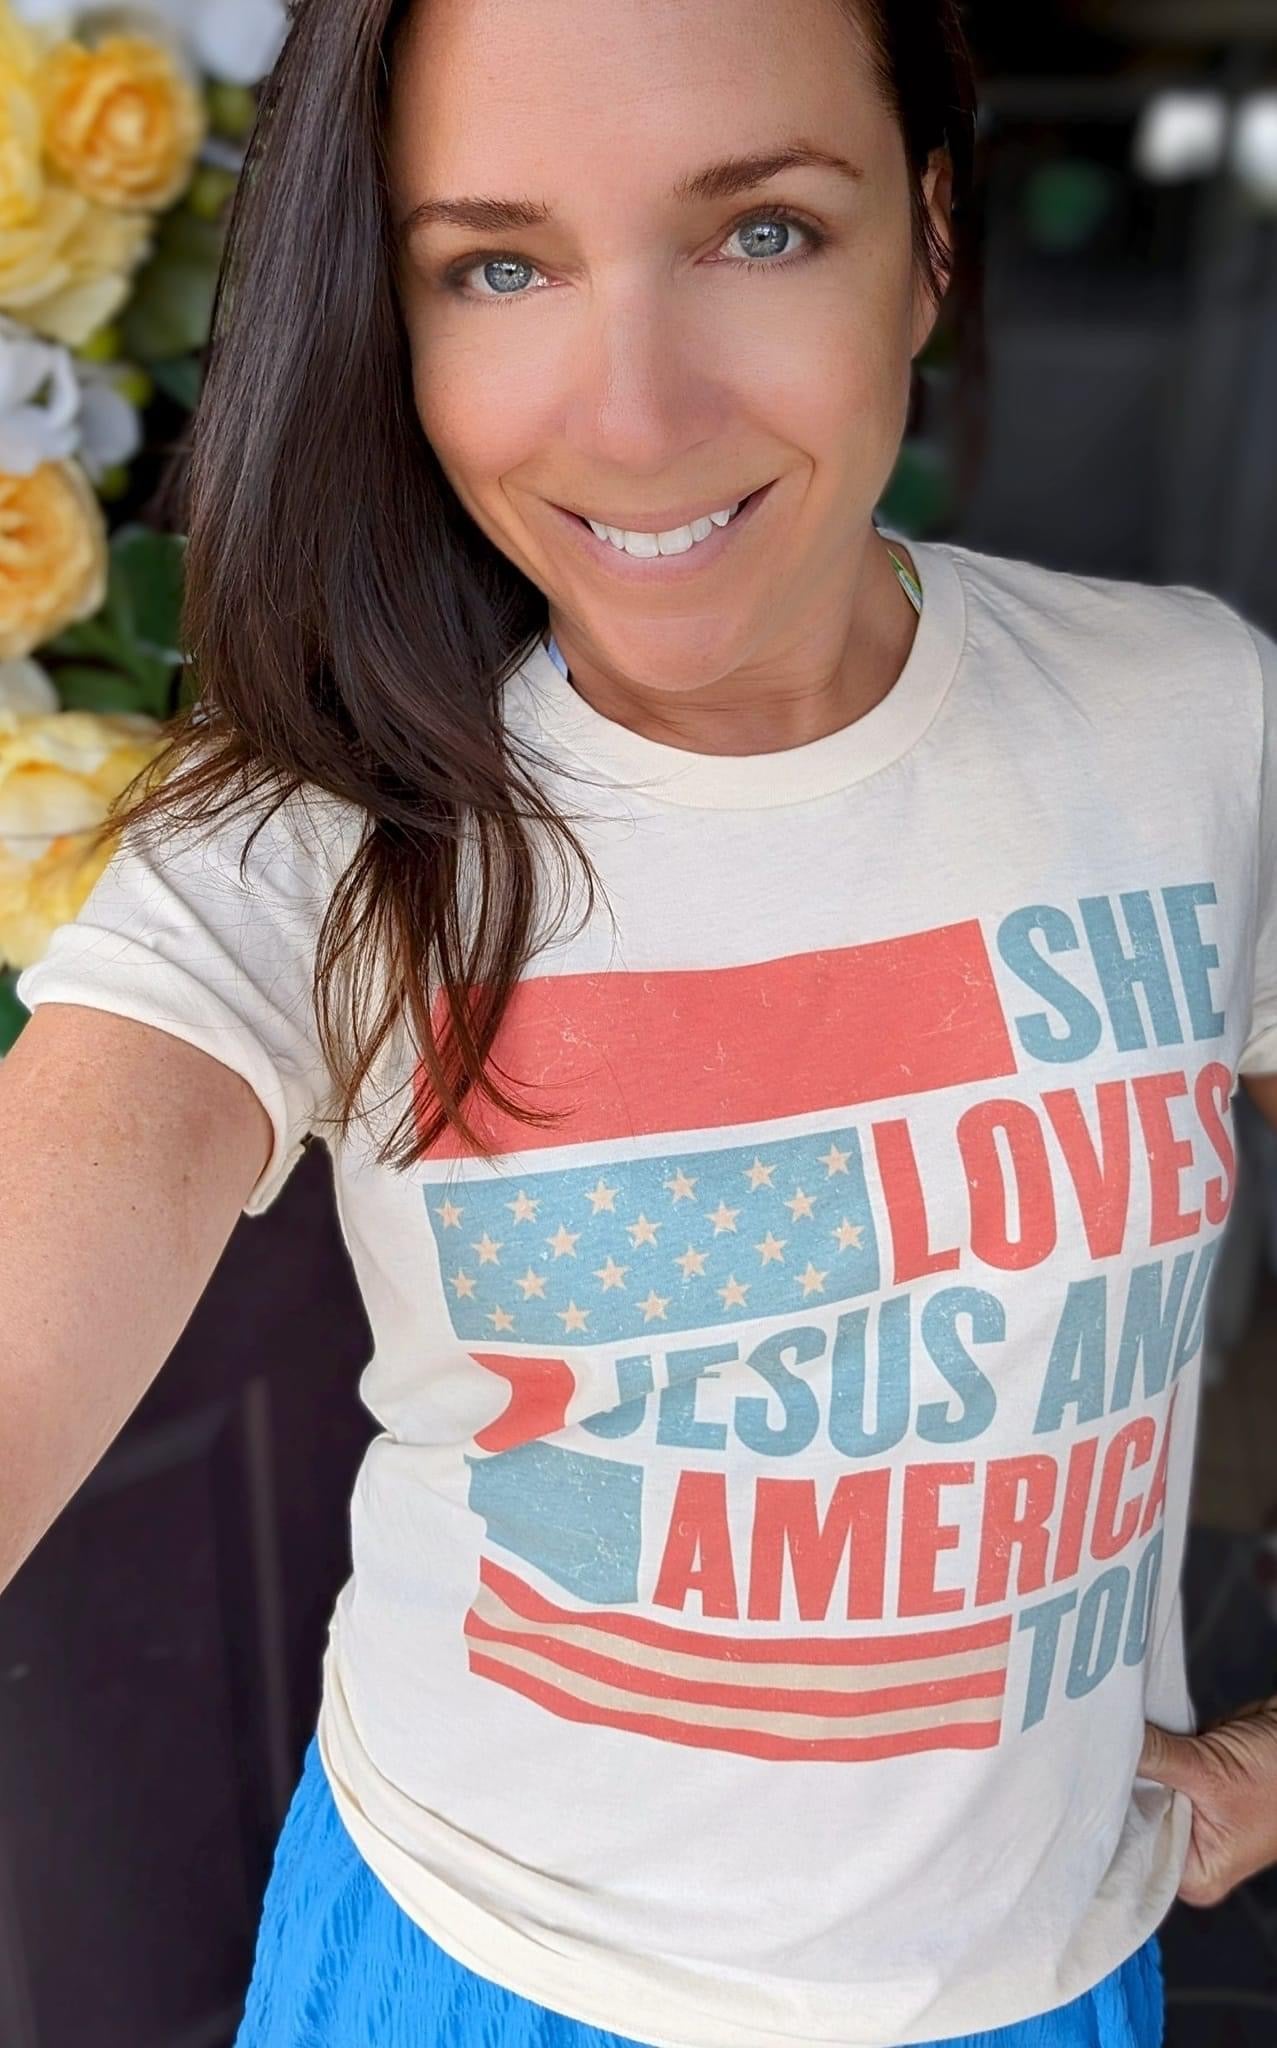 Good Girl T-Shirt - She Loves Jesus and America Too